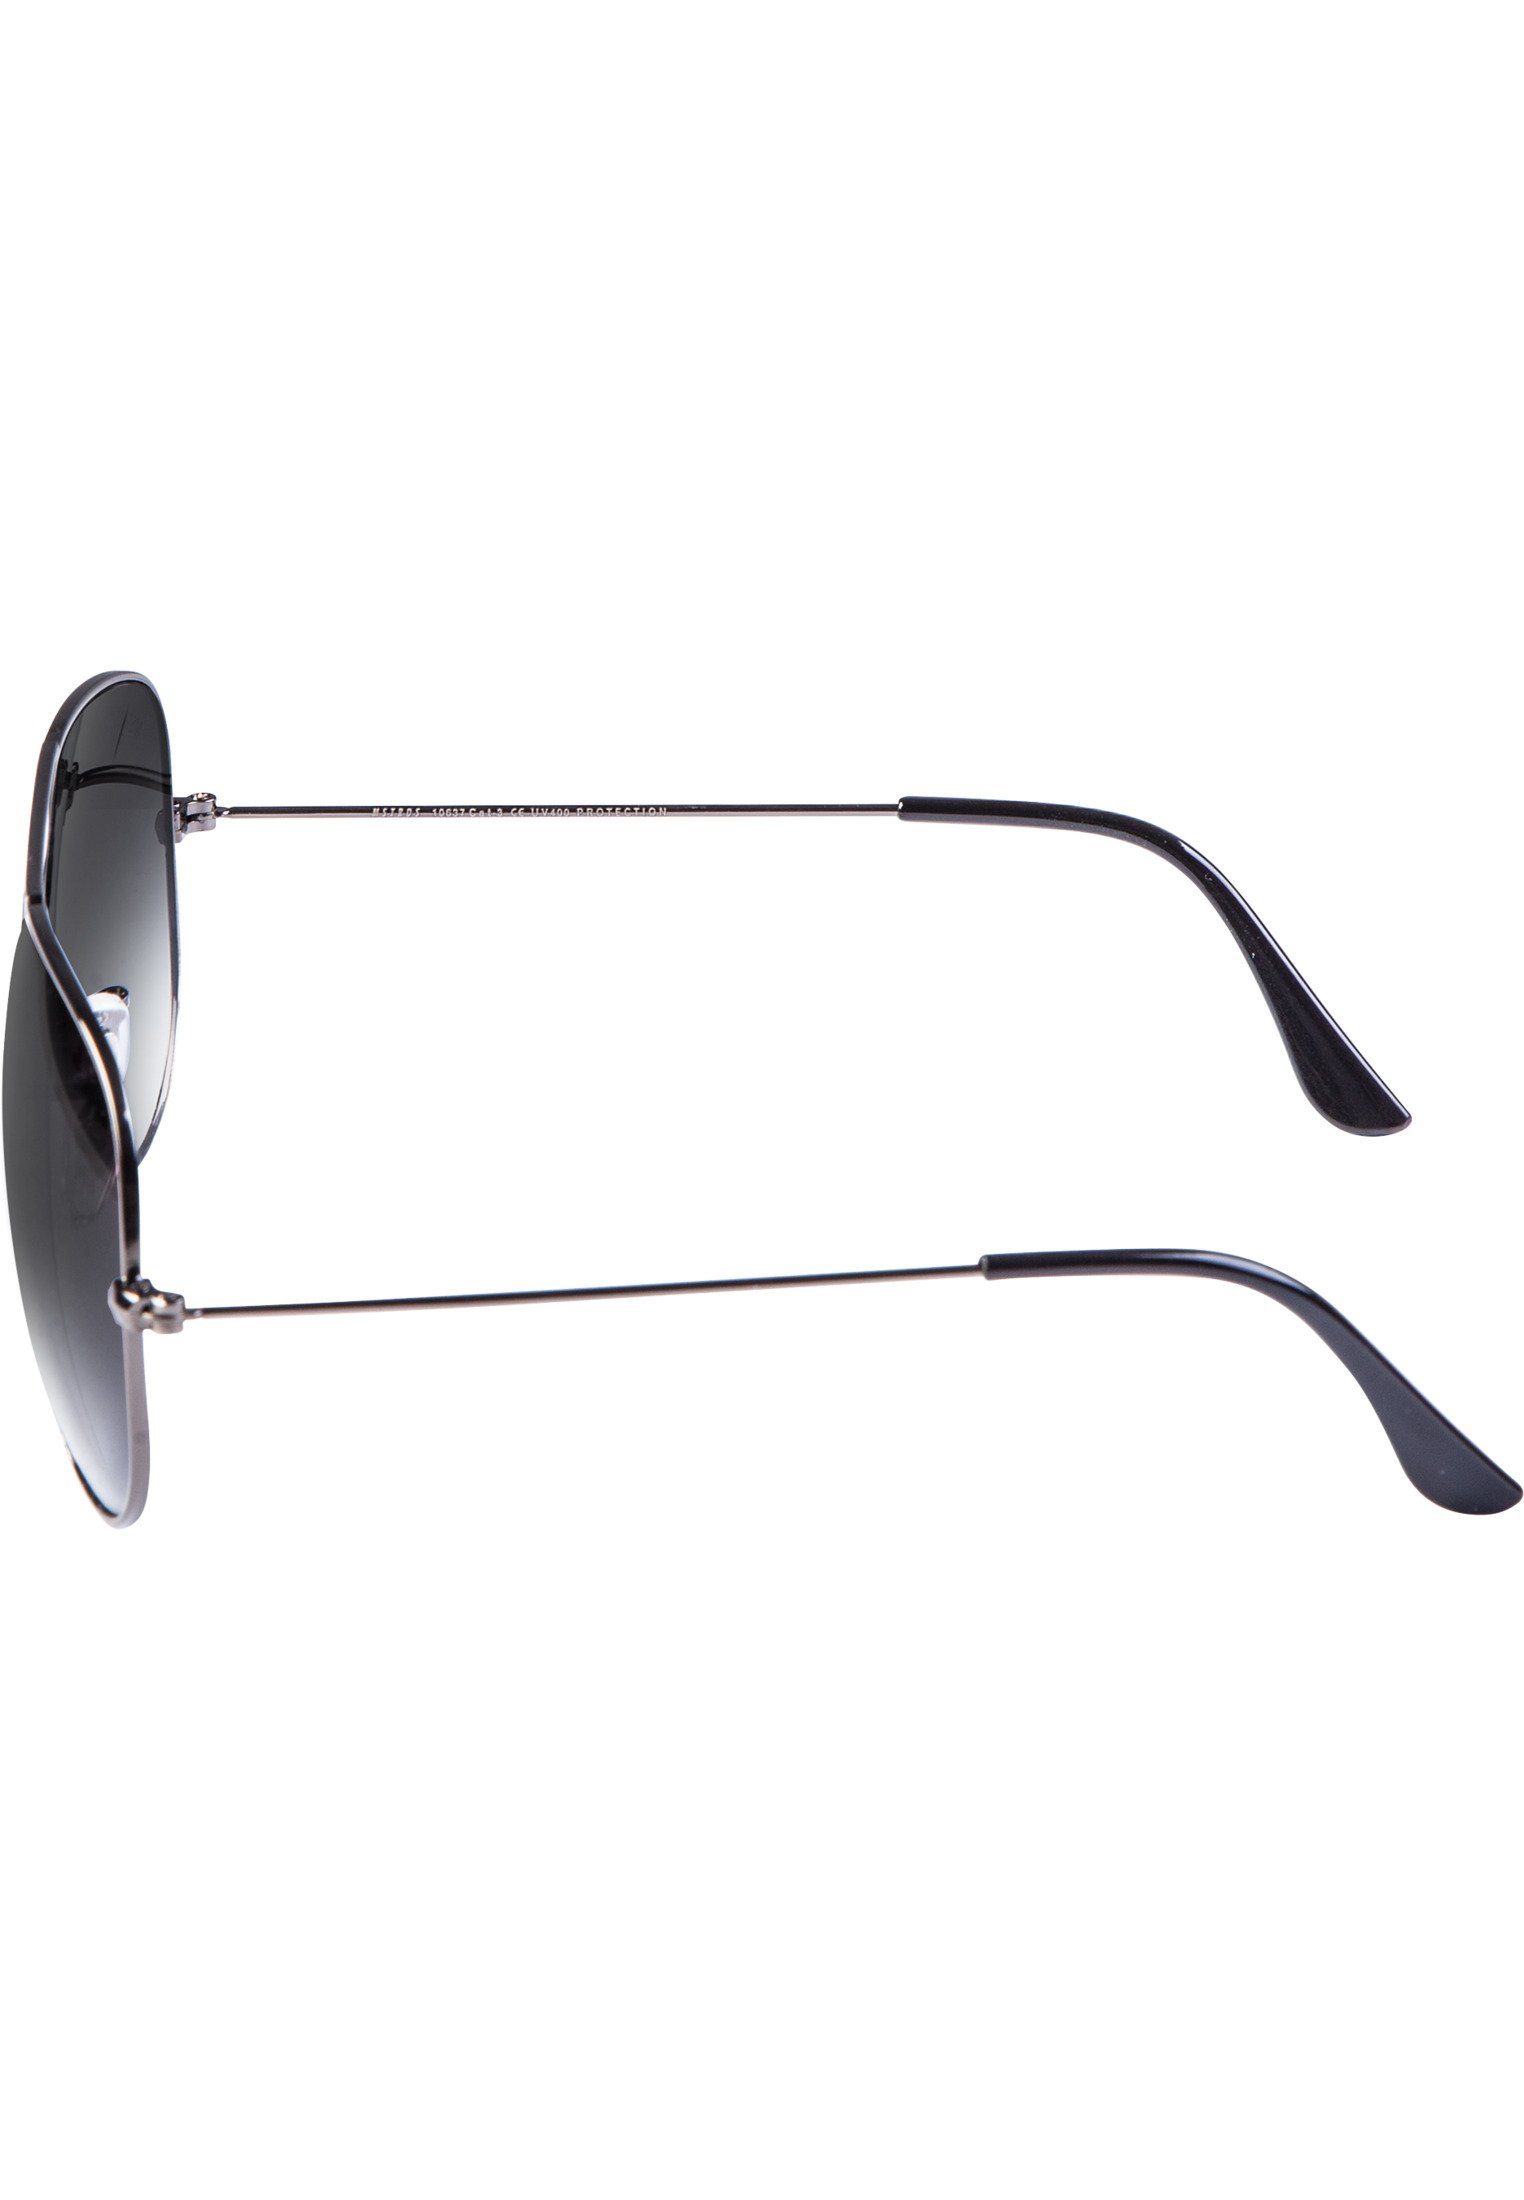 gun/grey MSTRDS Youth PureAv Accessoires Sunglasses Sonnenbrille